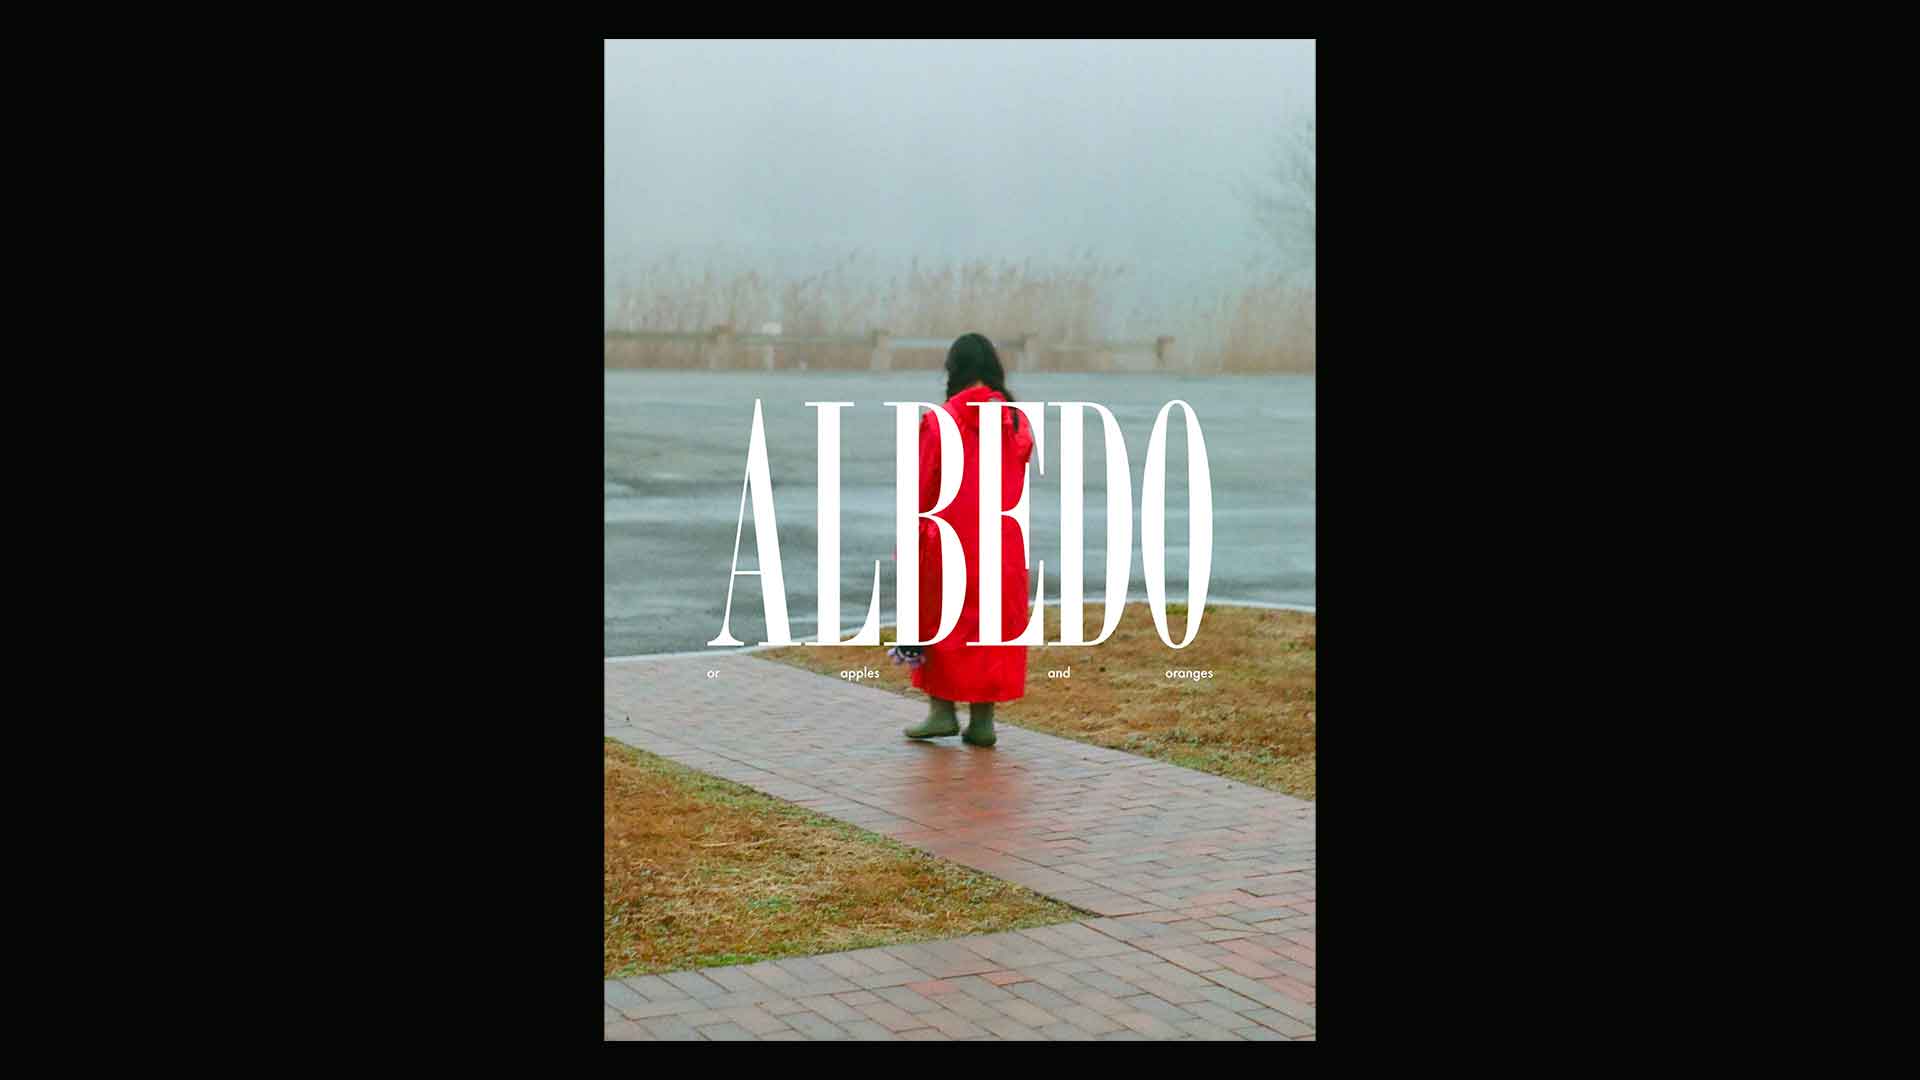 Albedo 7